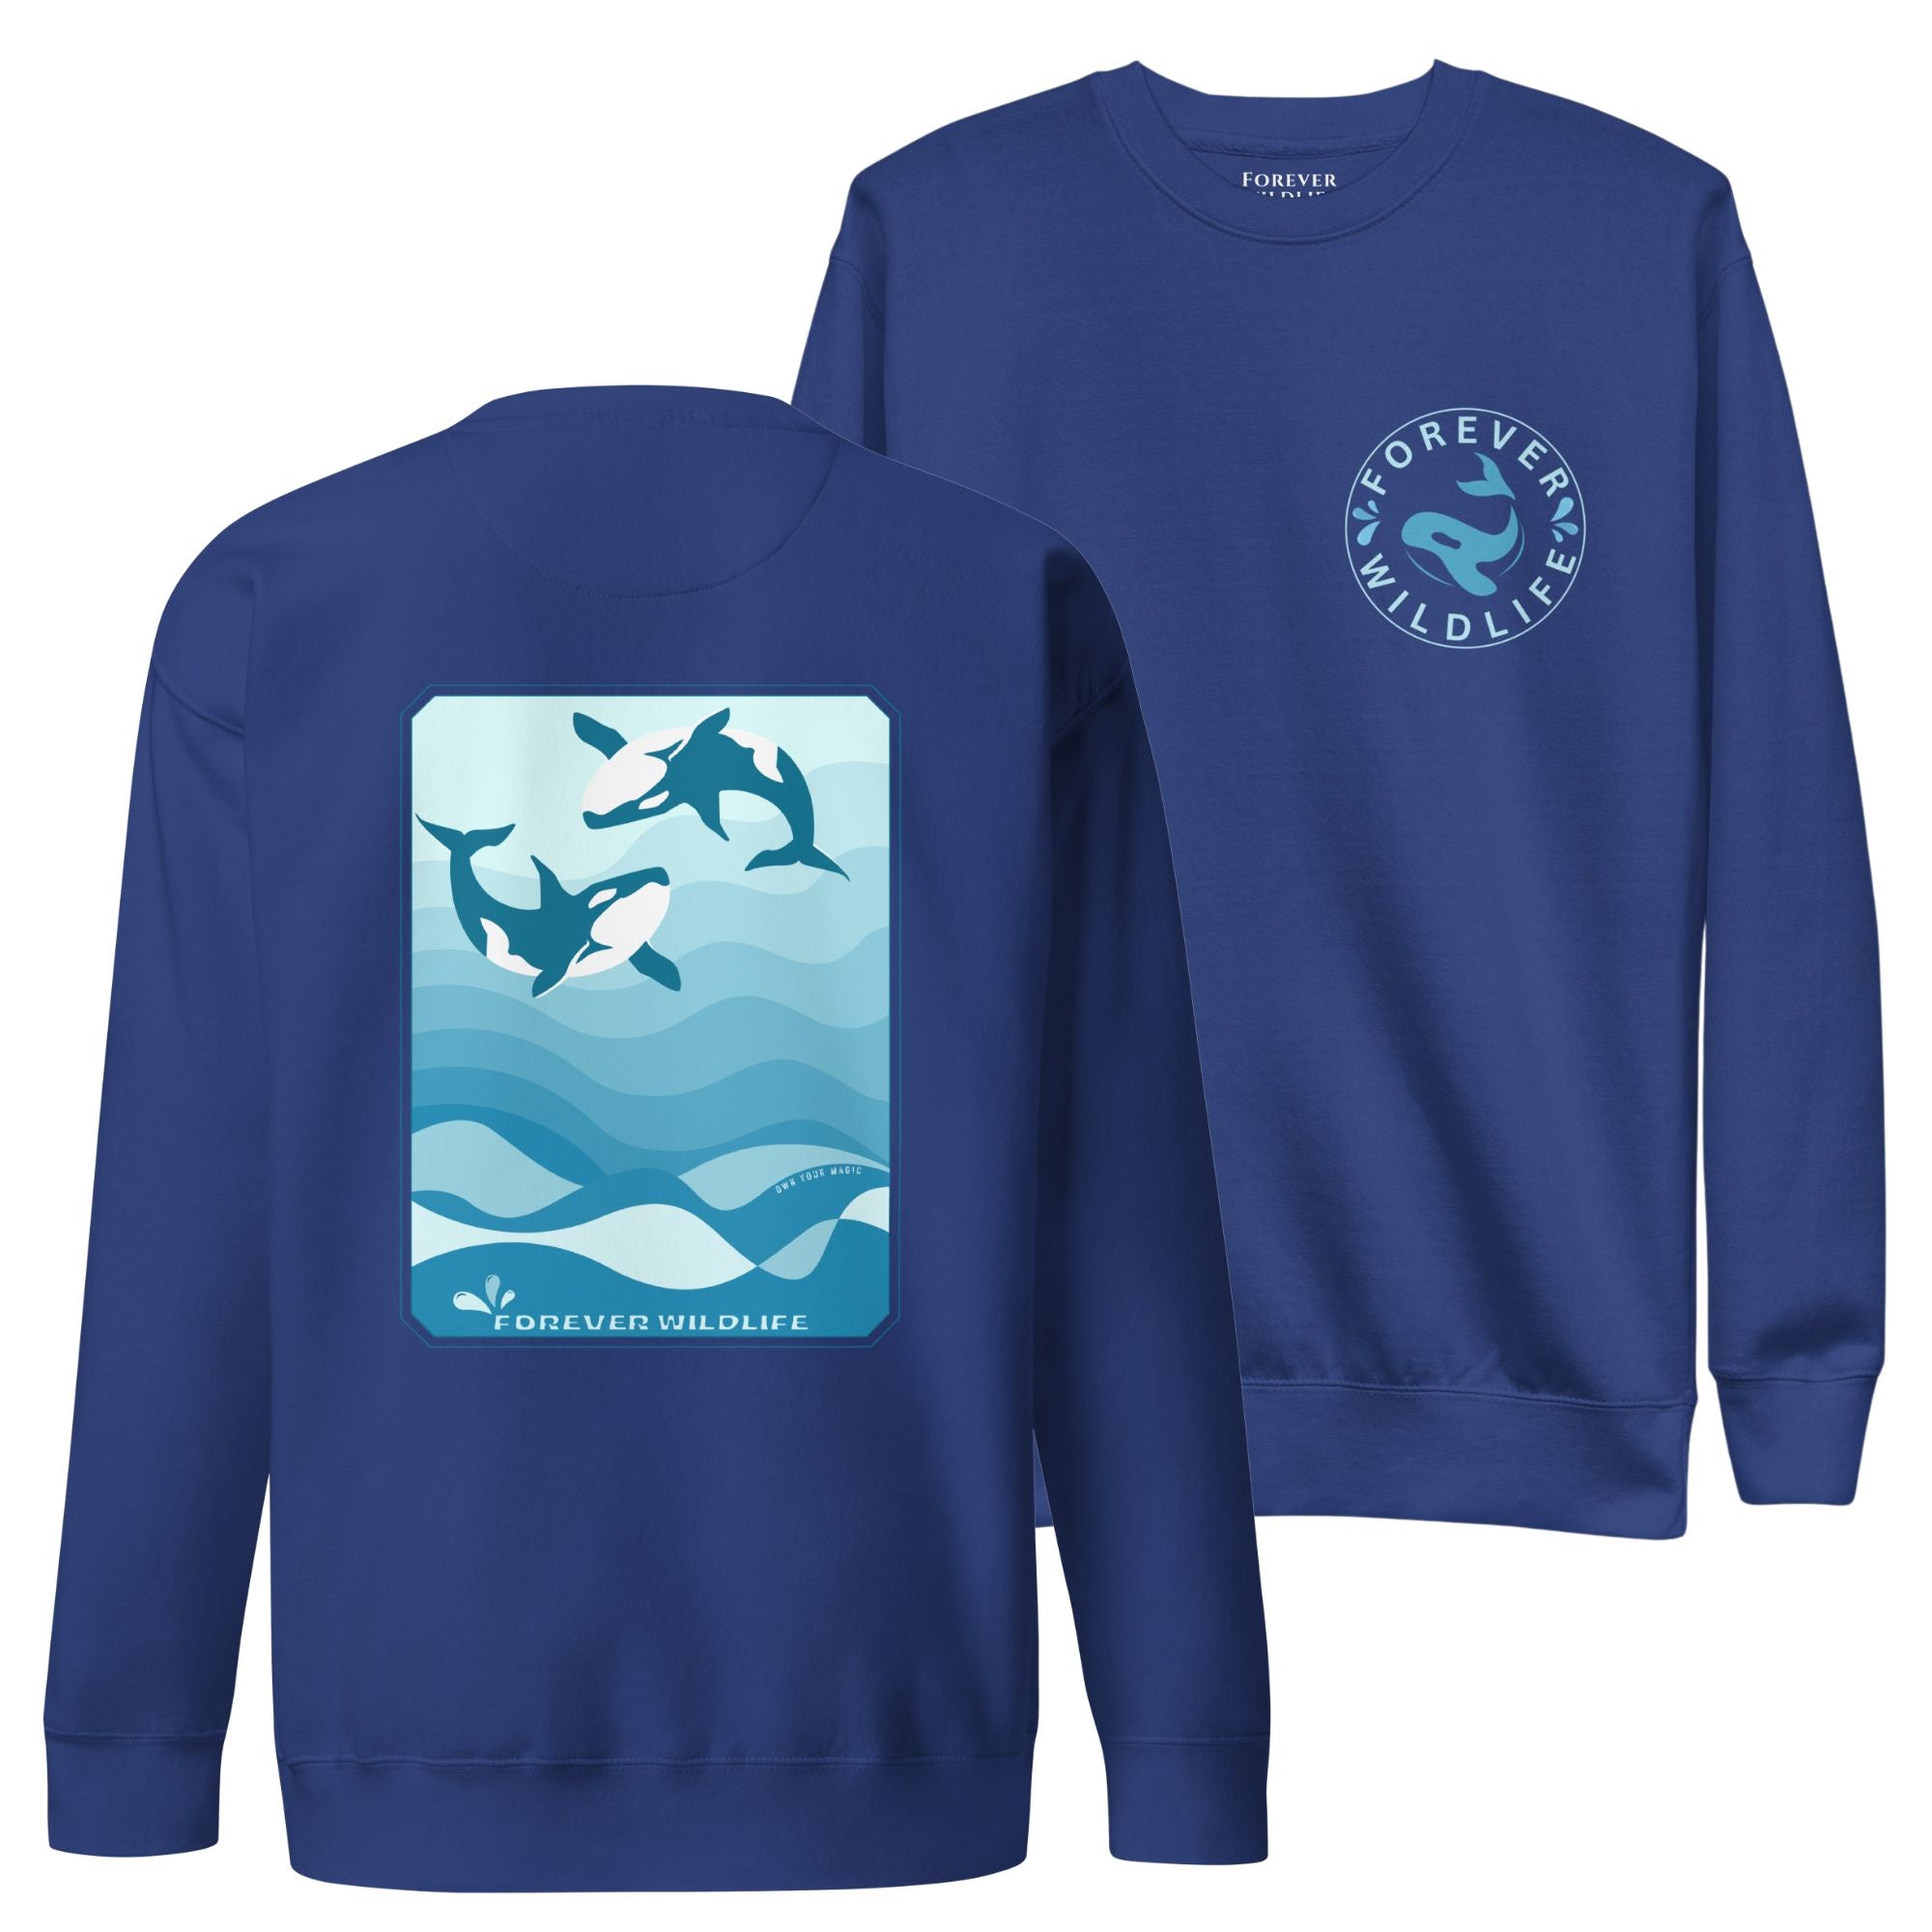 Orca Sweatshirt, beautiful team royal blue Orca Sweatshirt with Killer Whales on the sweatshirt by Forever Wildlife selling Wildlife Sweatshirts.